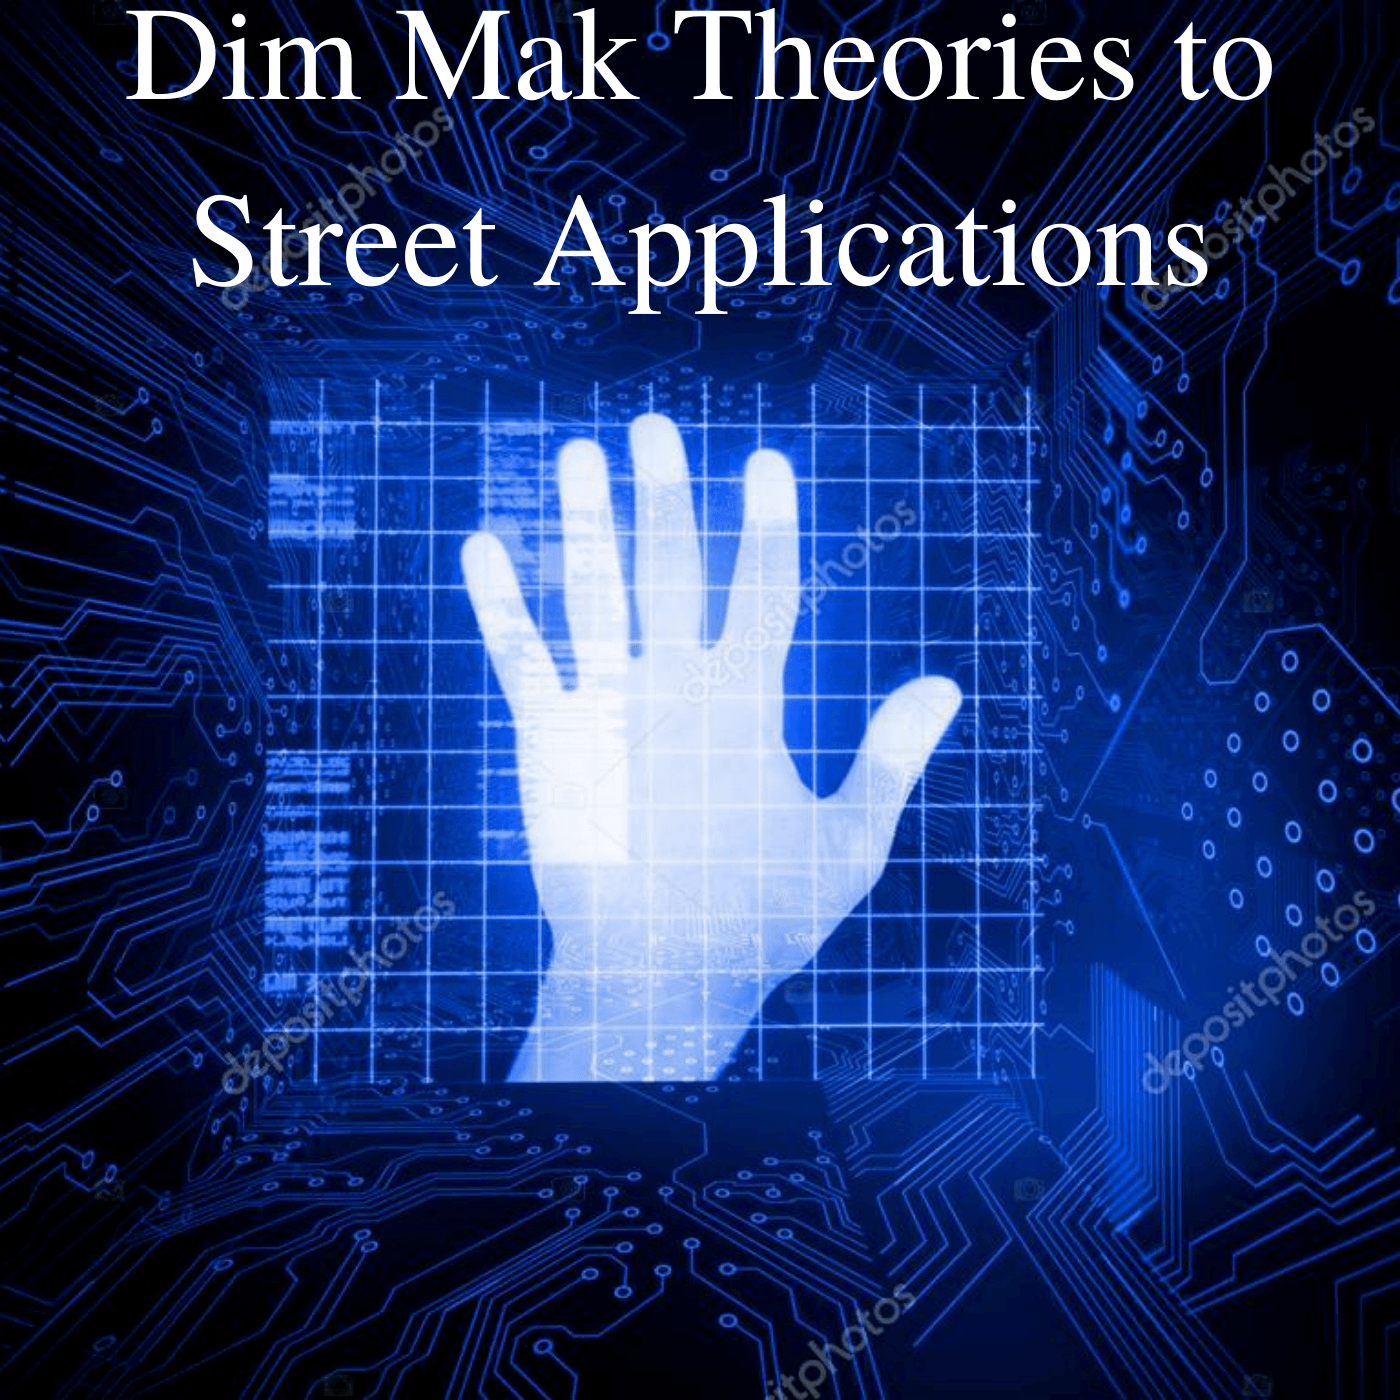 * Dim Mak Theories to Street Applications